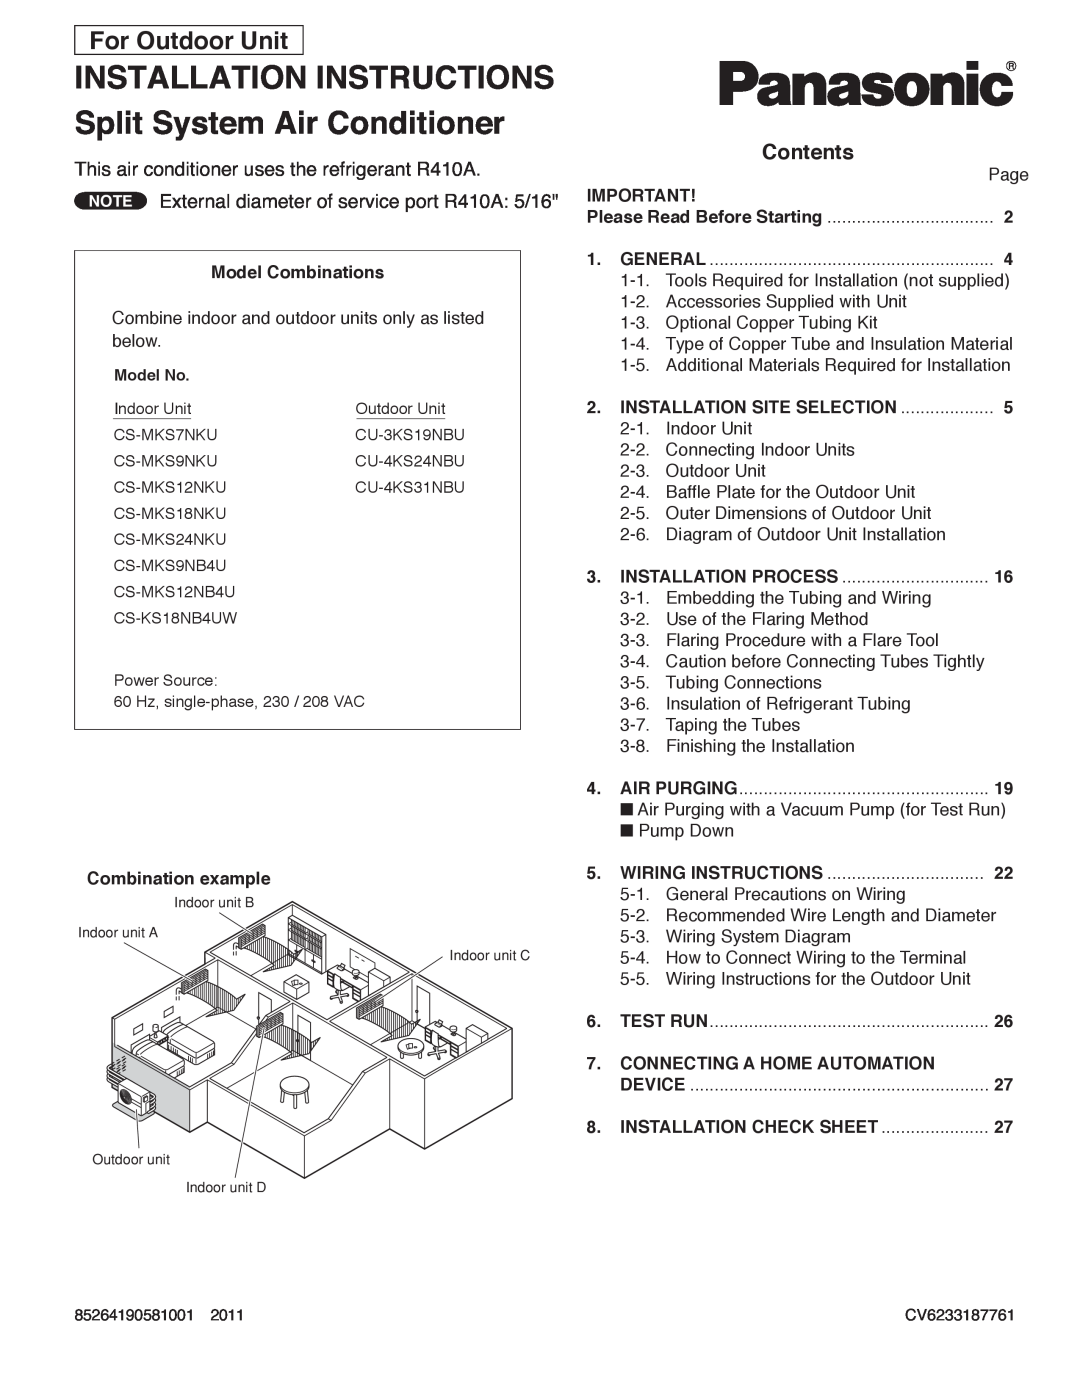 Panasonic CU-4KS31NBU service manual For Outdoor Unit, Contents 